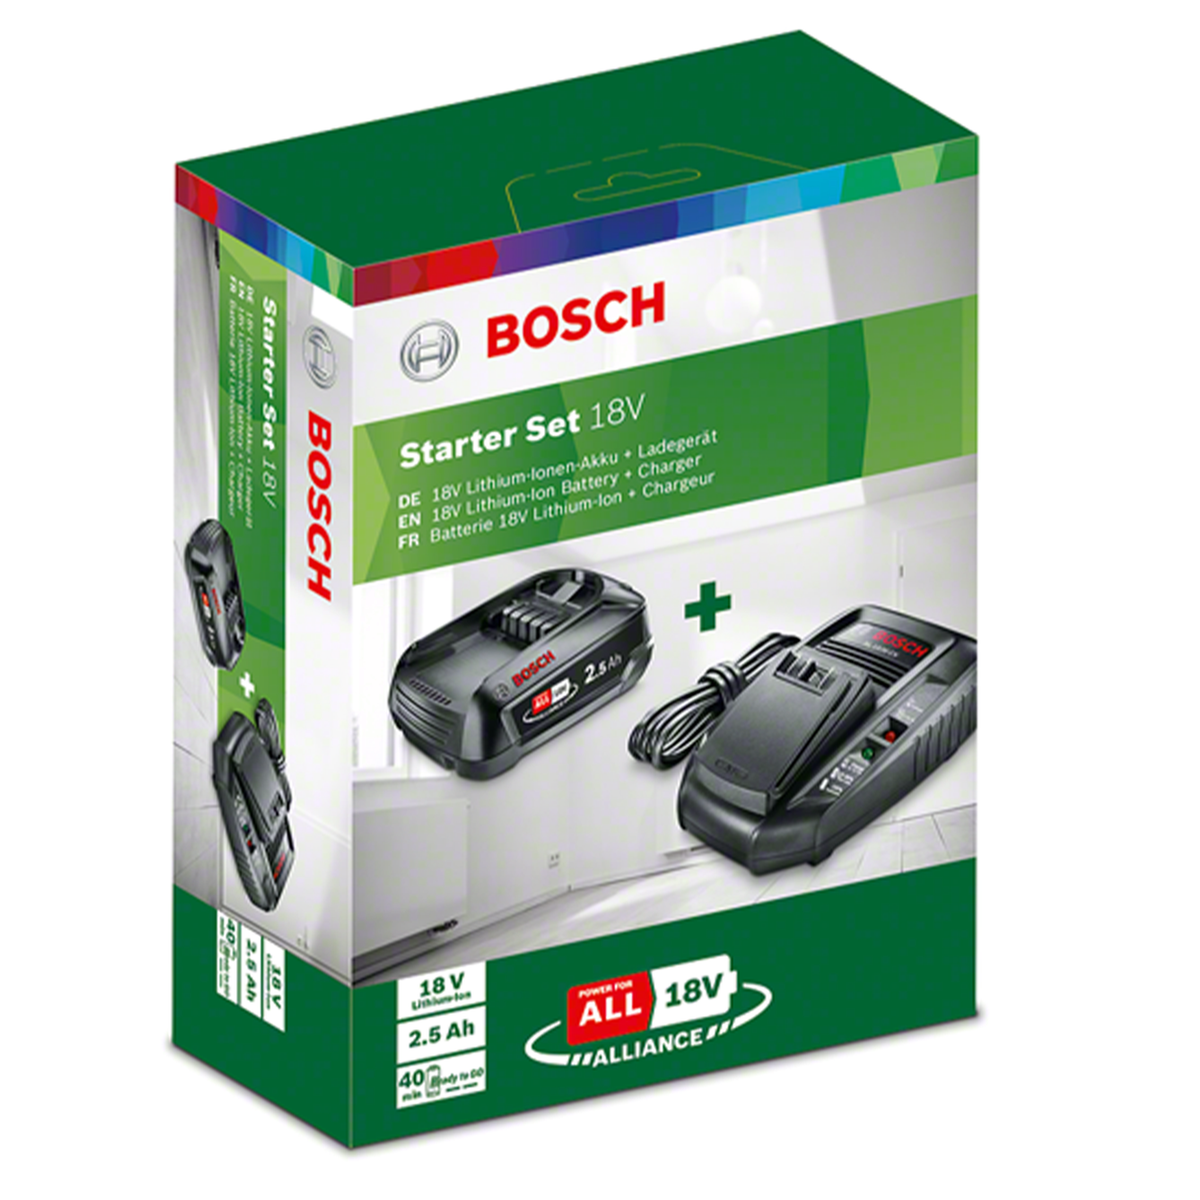 BOSCH Starter-Set 18V EU-Version